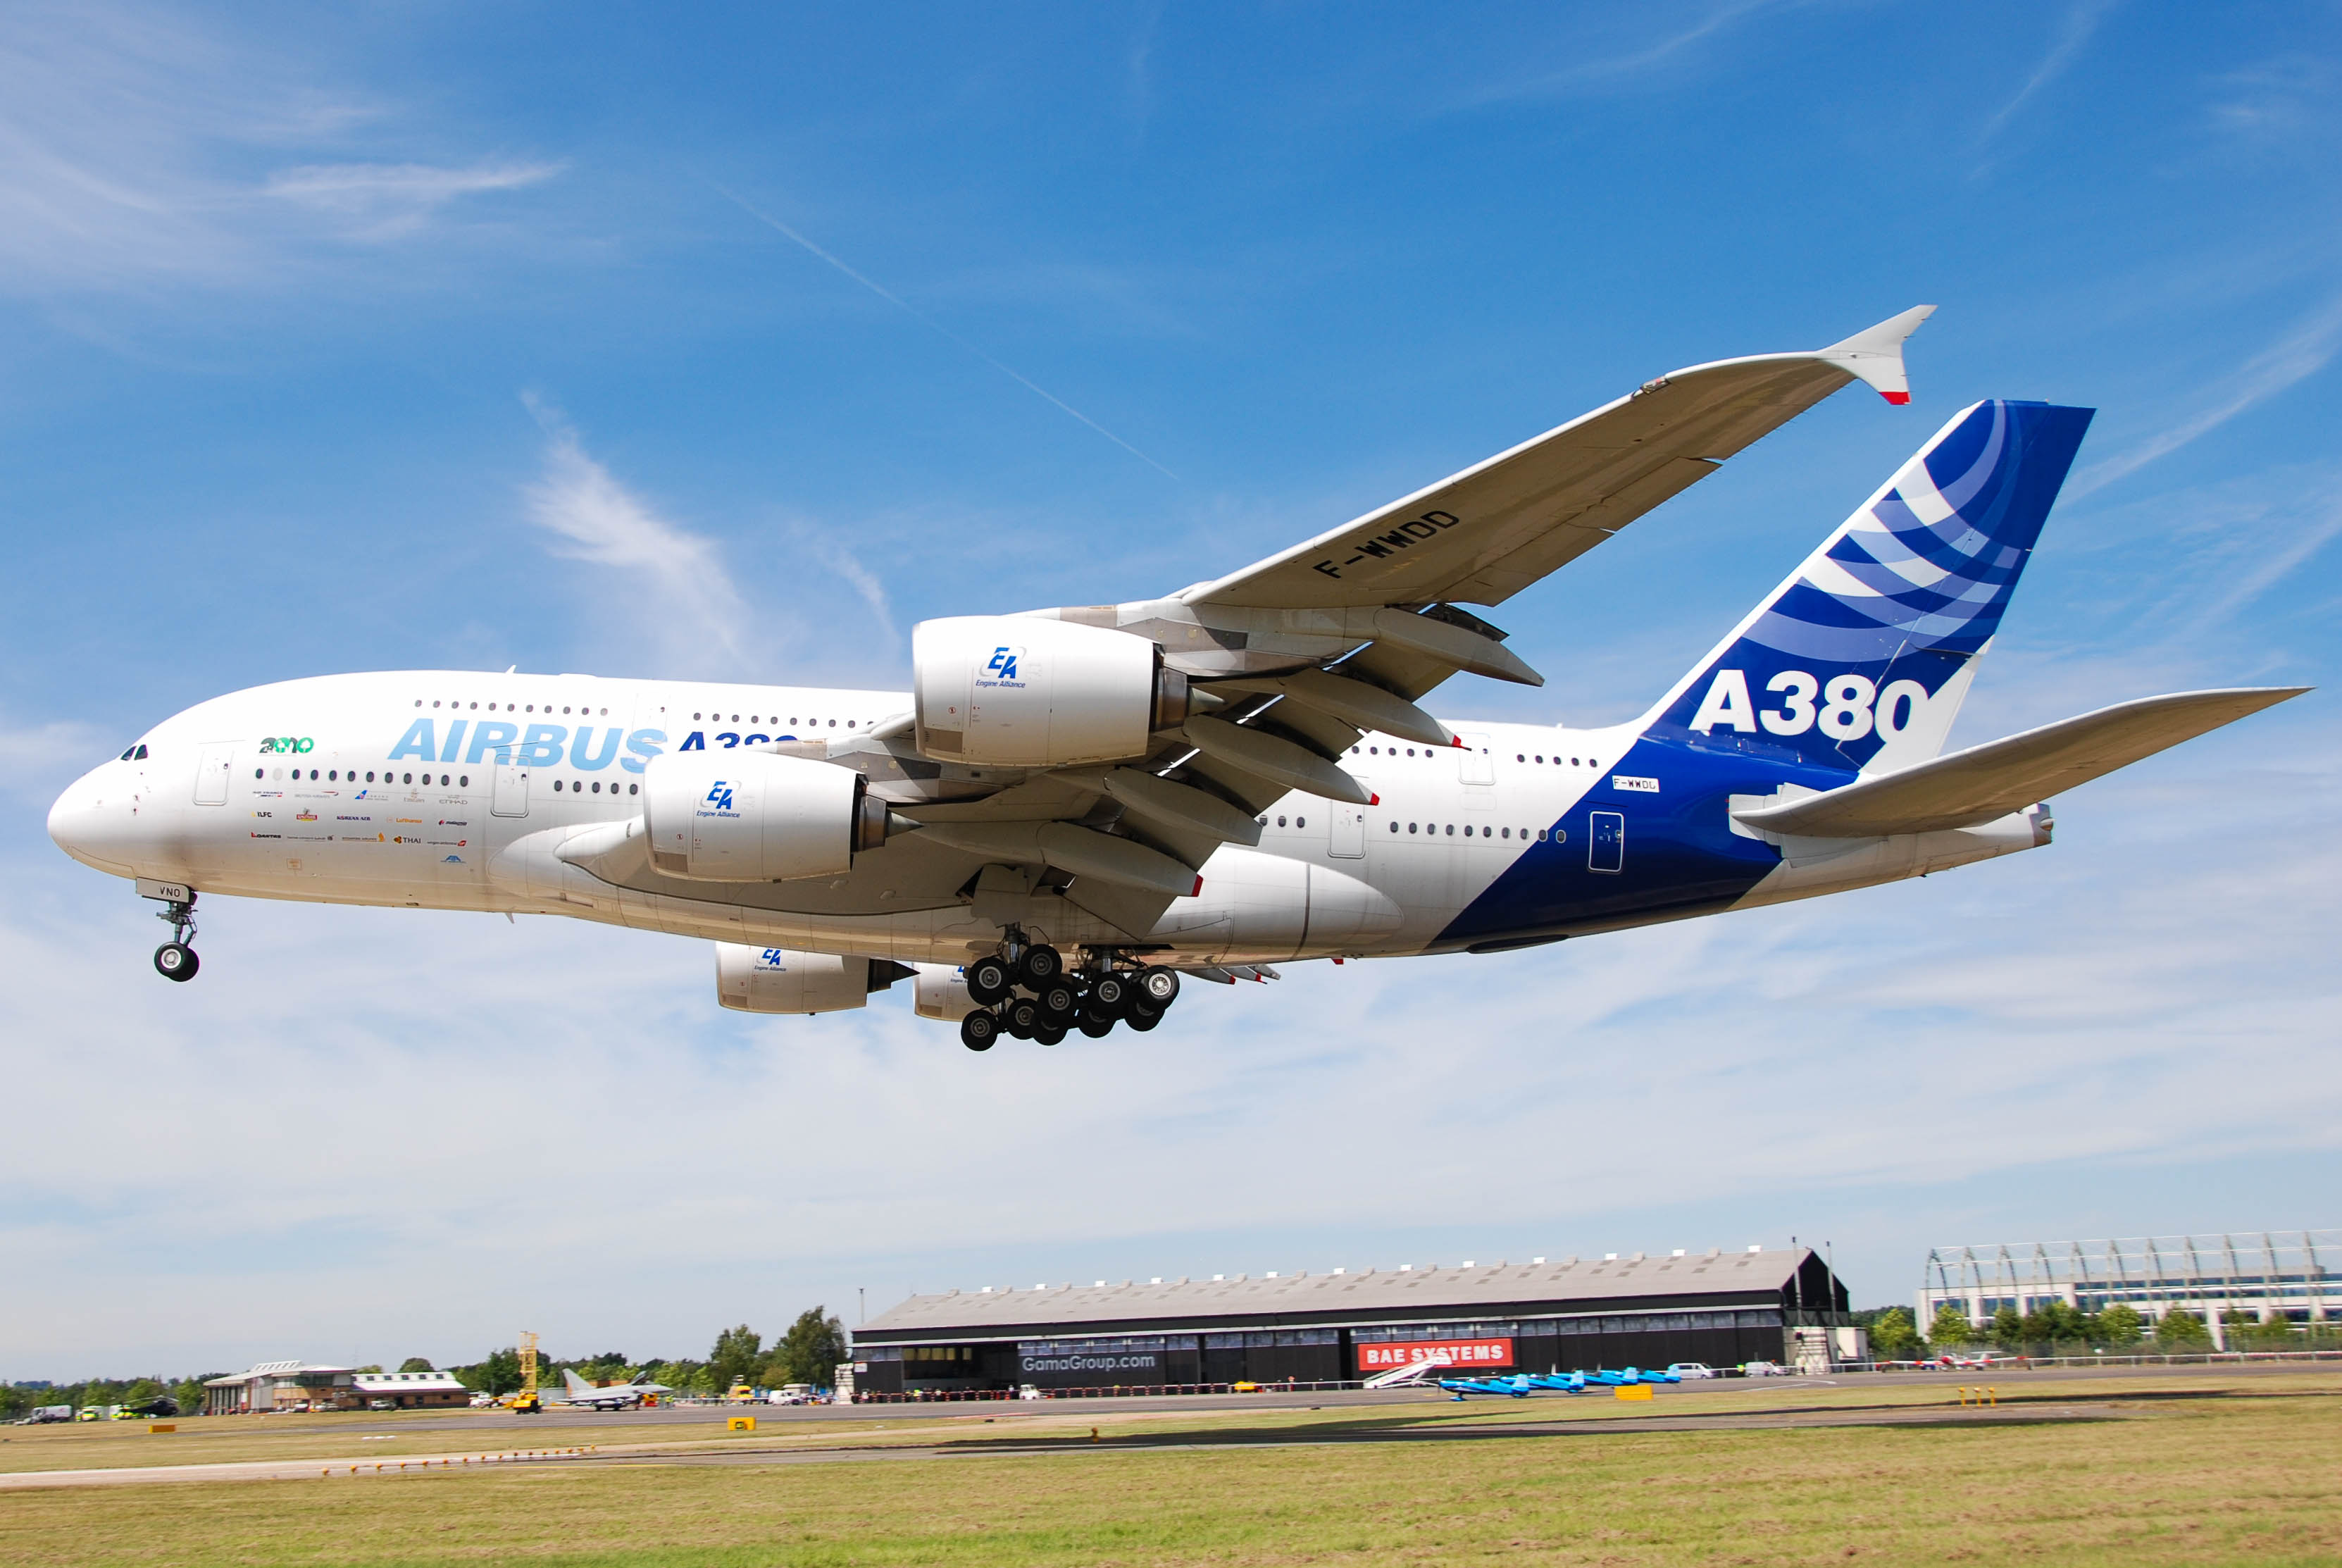 F-WWDD/FWWDD Preserved Airbus A380 Airframe Information - AVSpotters.com